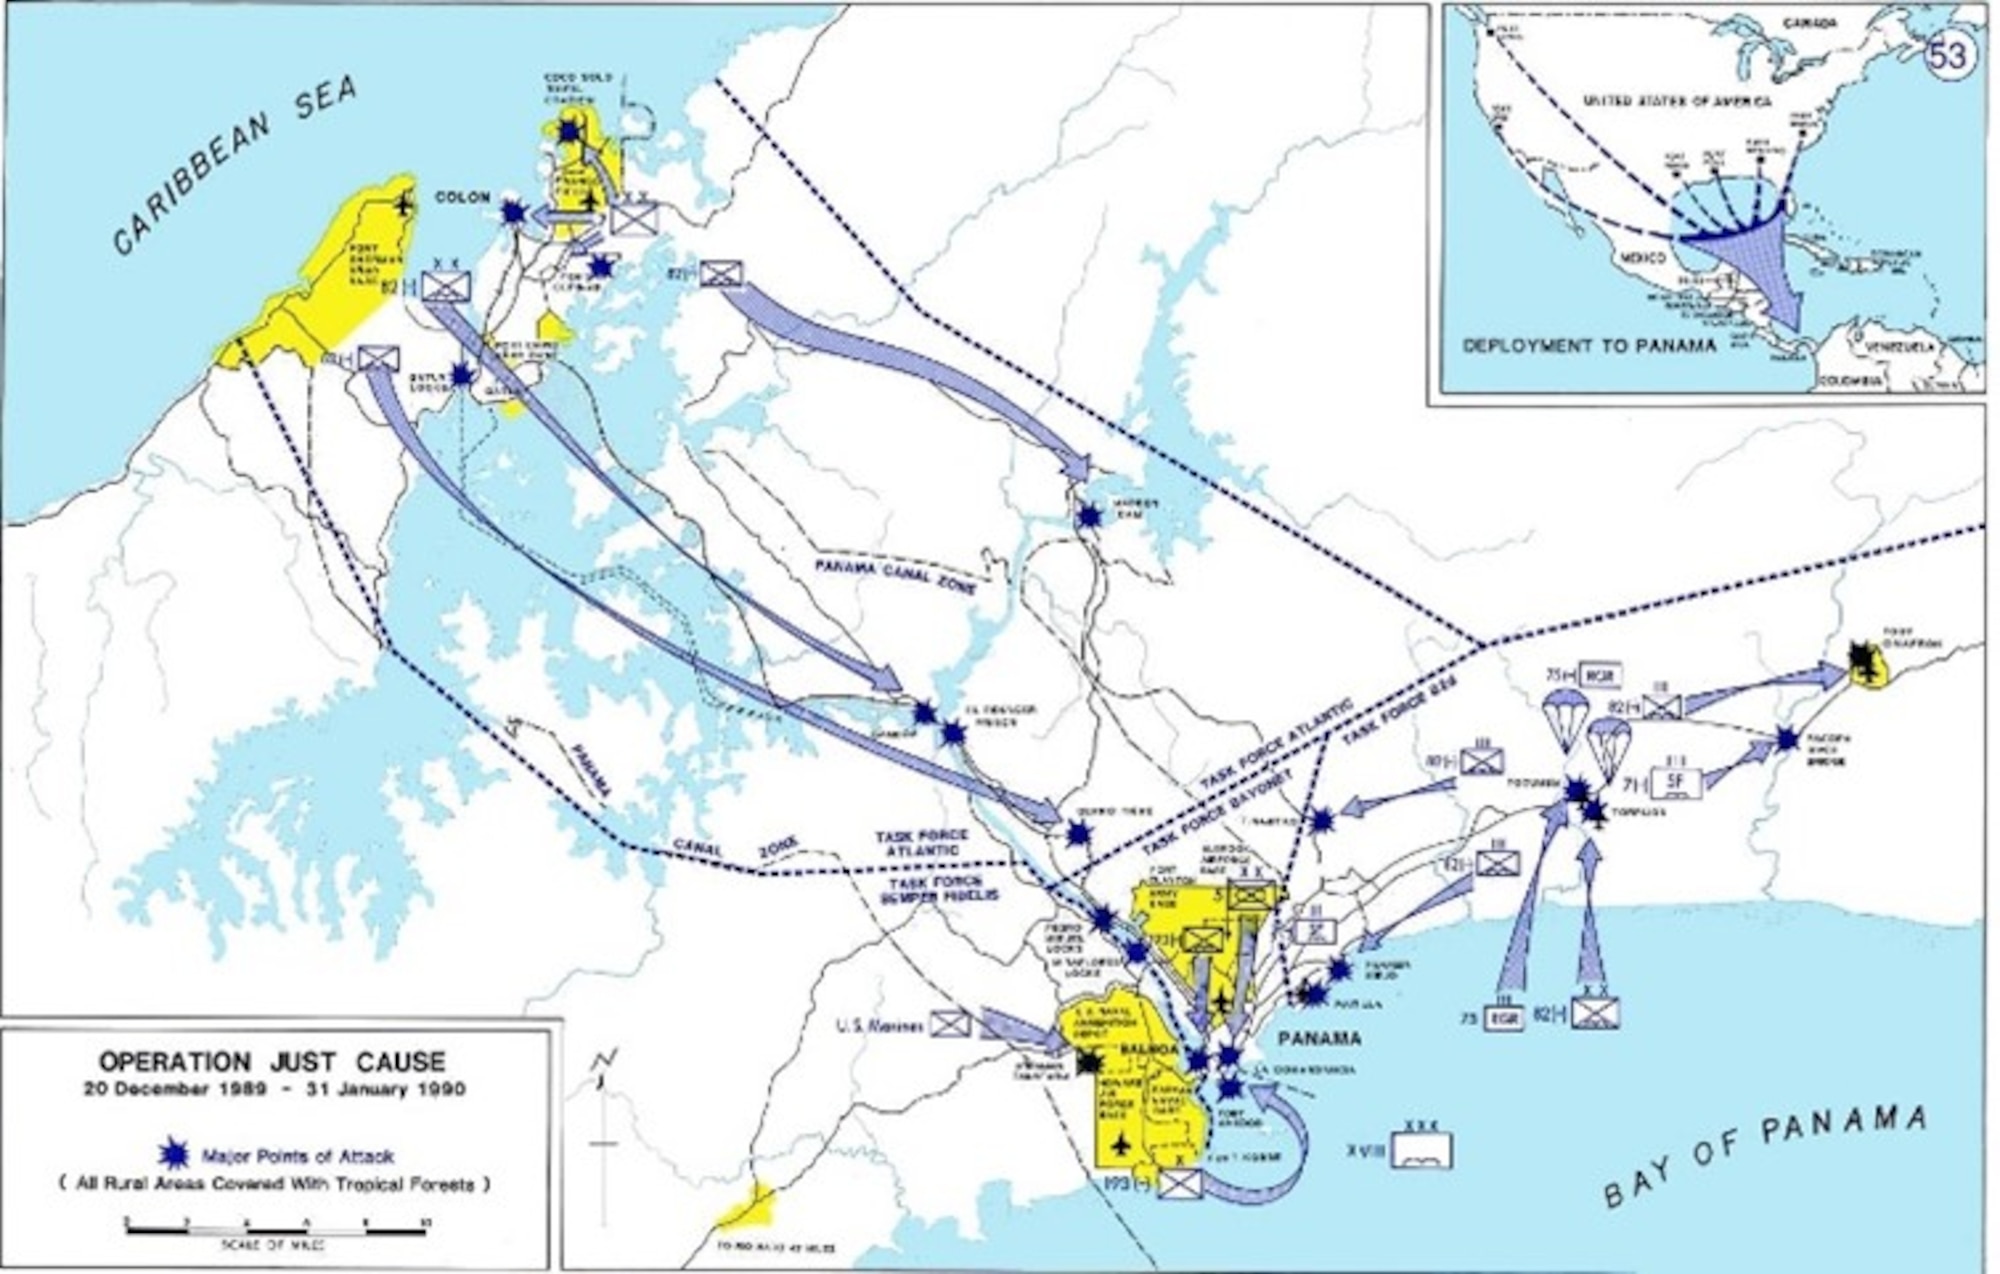 Map of operation region in Panama.